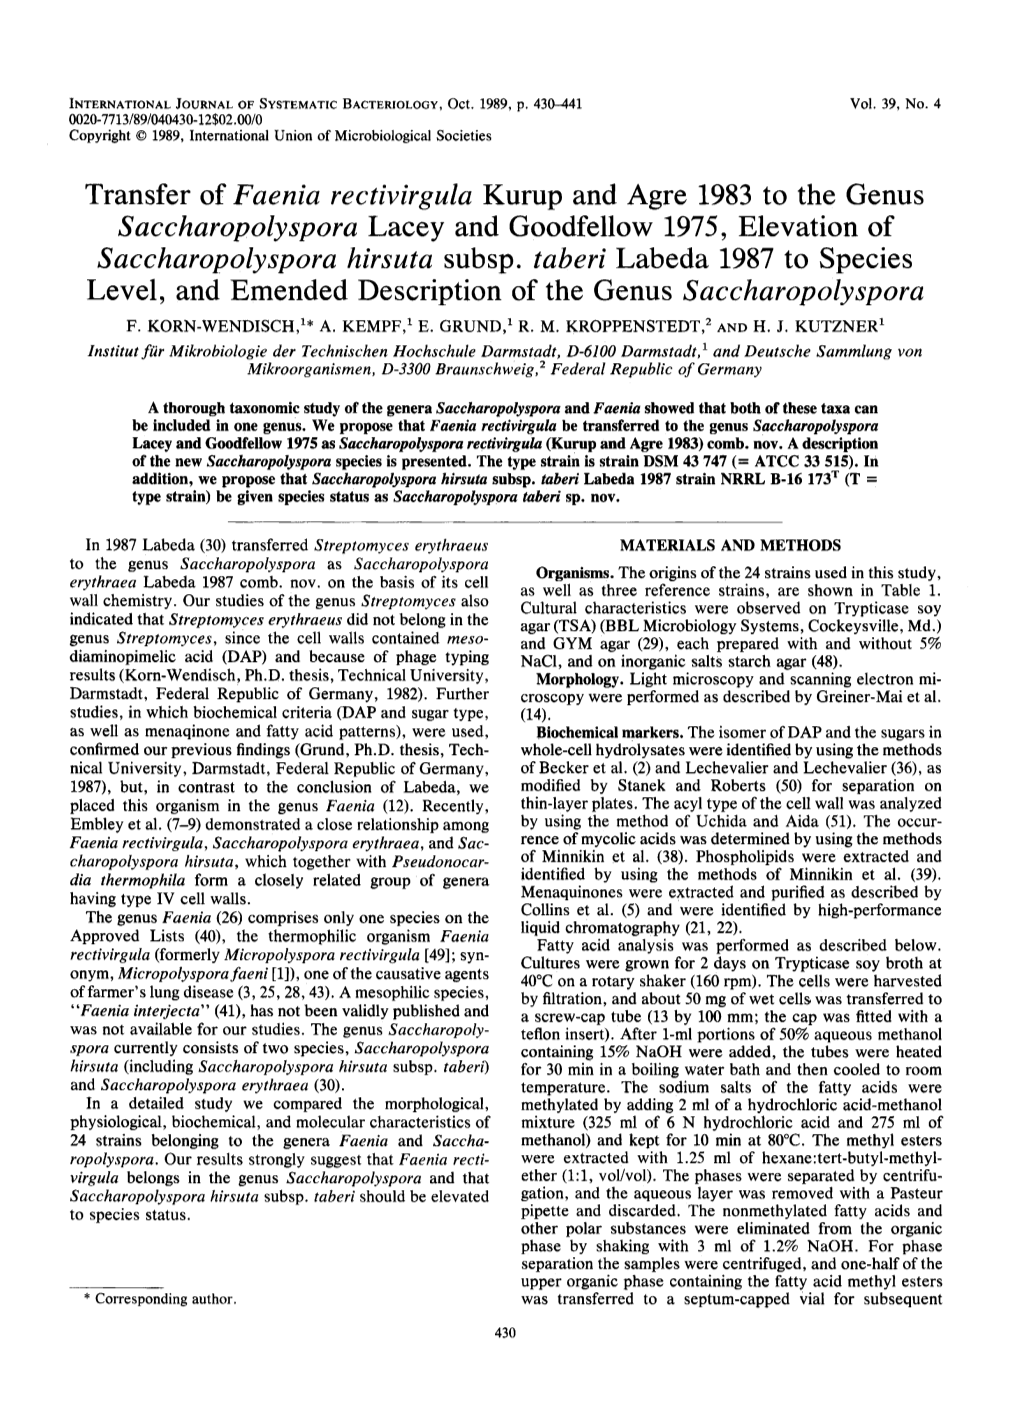 Faenia Rectivirgula Kurup and Agre 1983 to the Genus Saccharopolyspora Lacey and Goodfellow 1975, Elevation of Saccharopolyspora Hirsuta Subsp